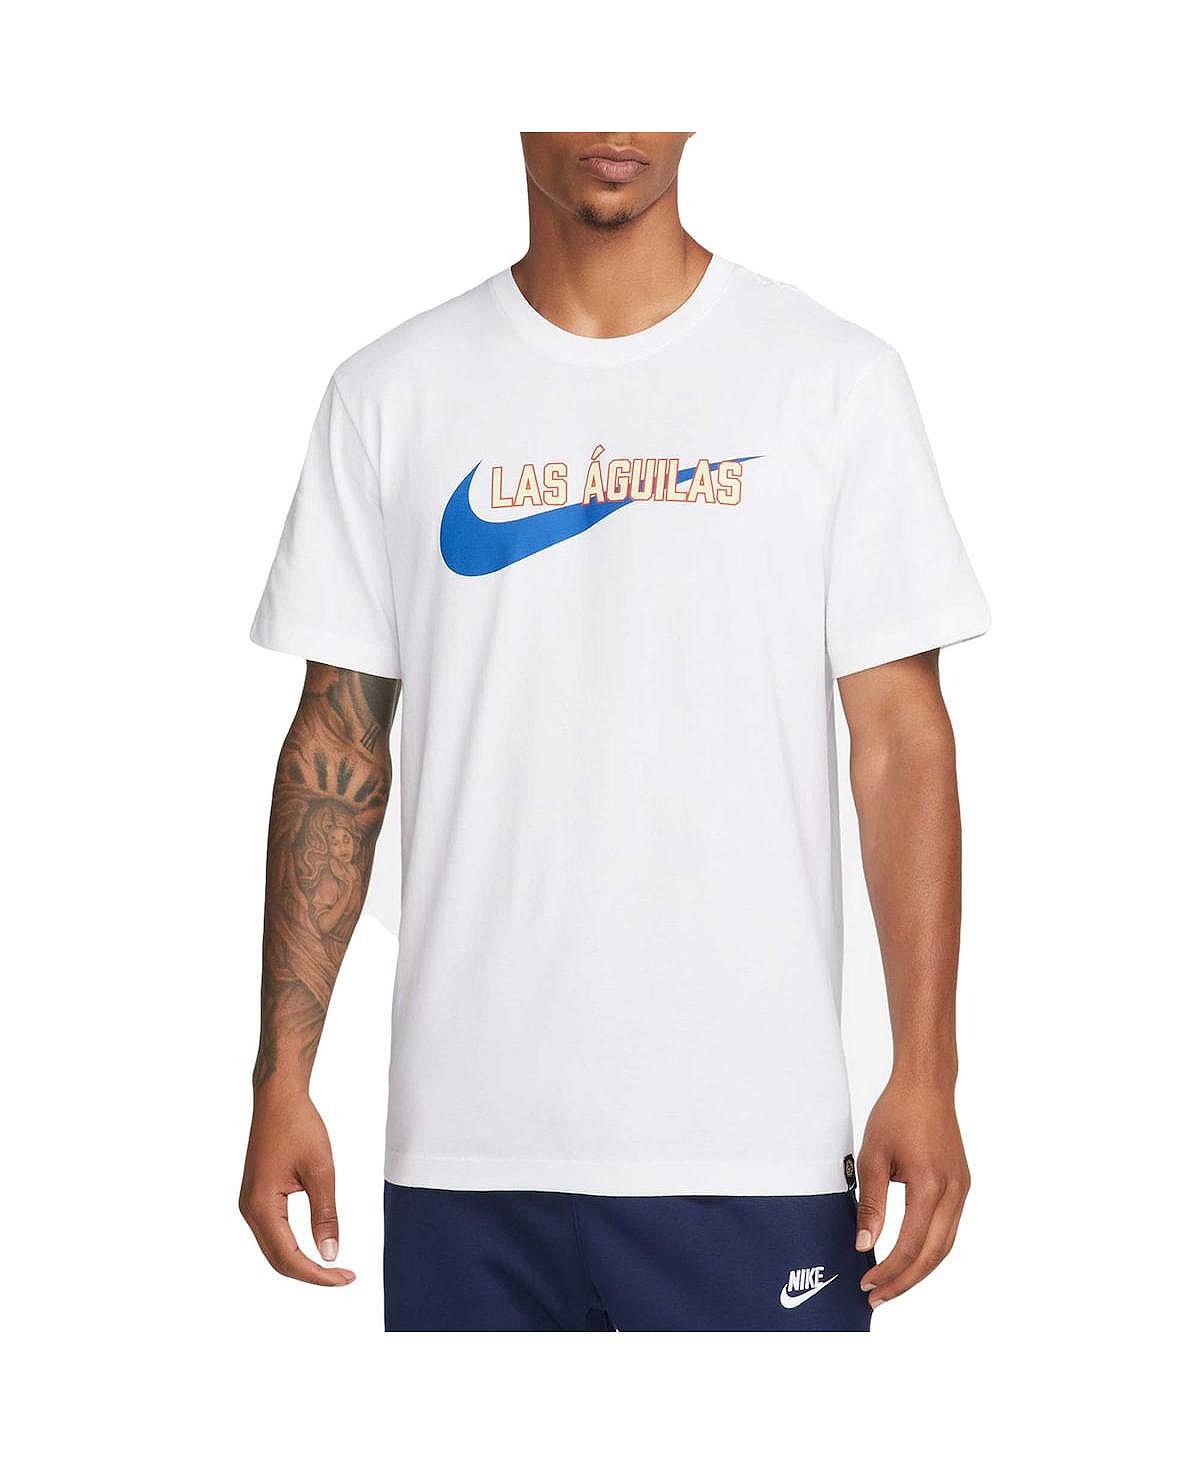 Мужская белая футболка Club America с галочкой Nike